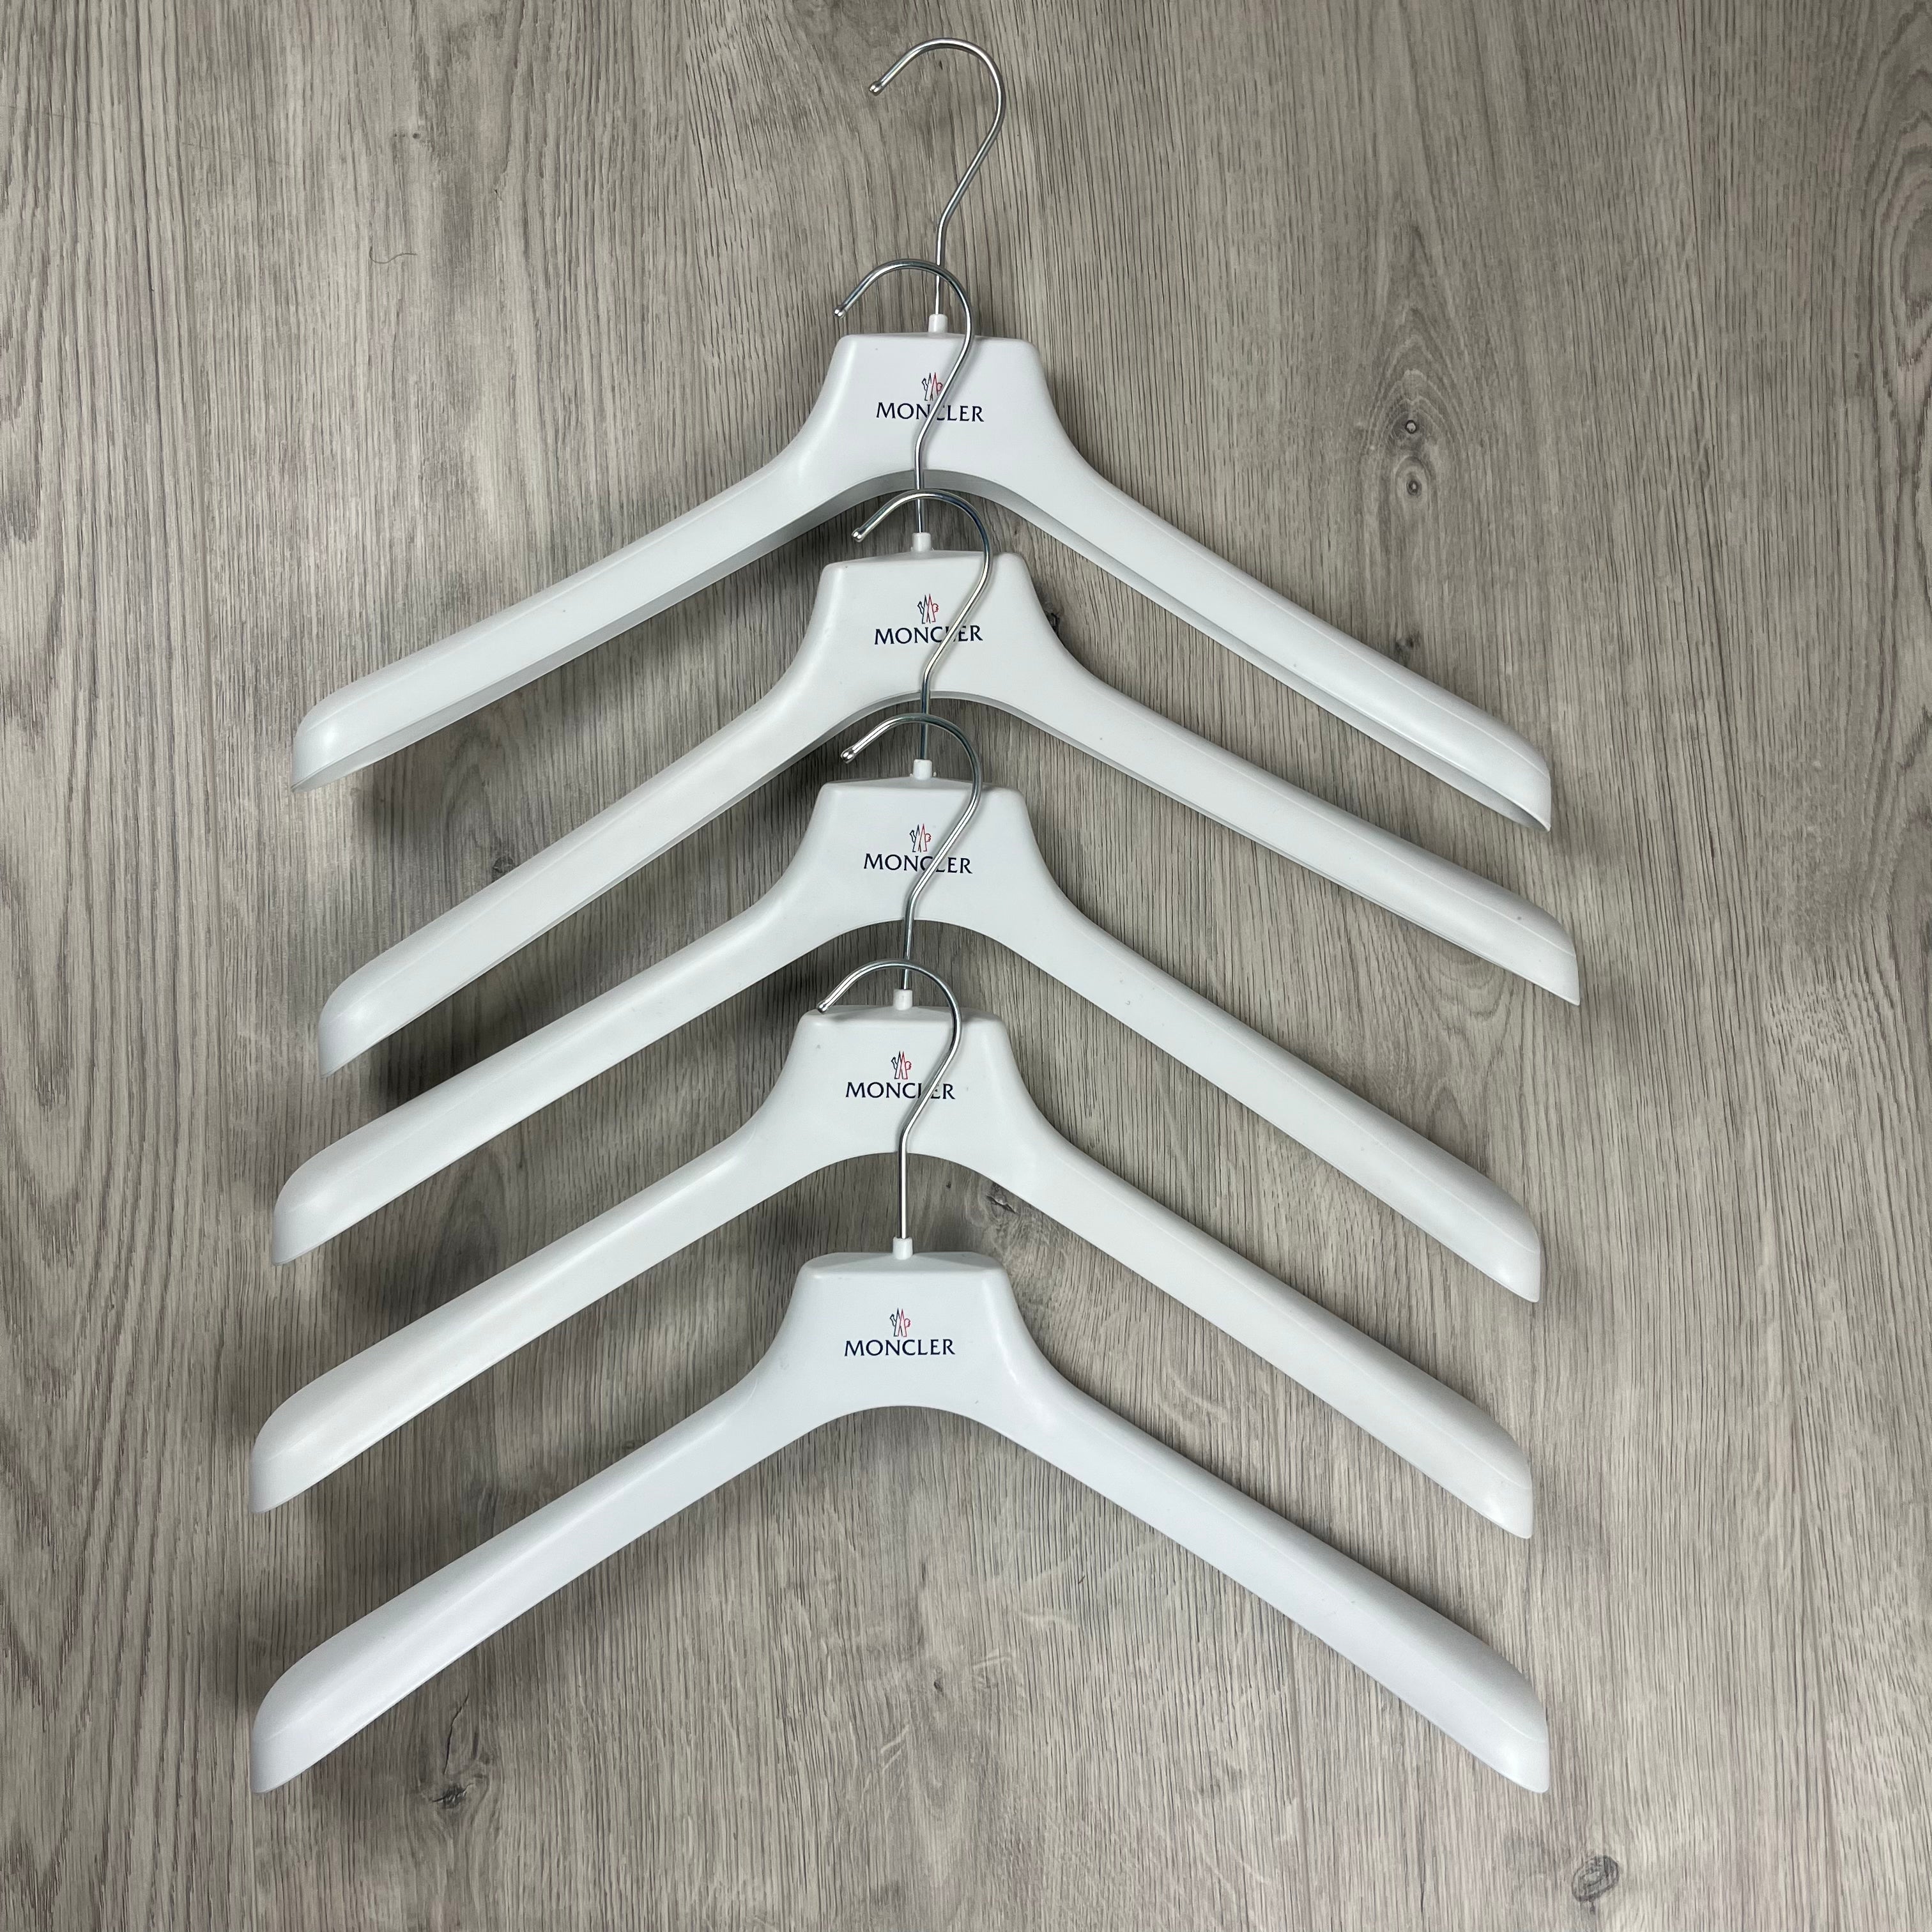 Designer Clothing Hangers